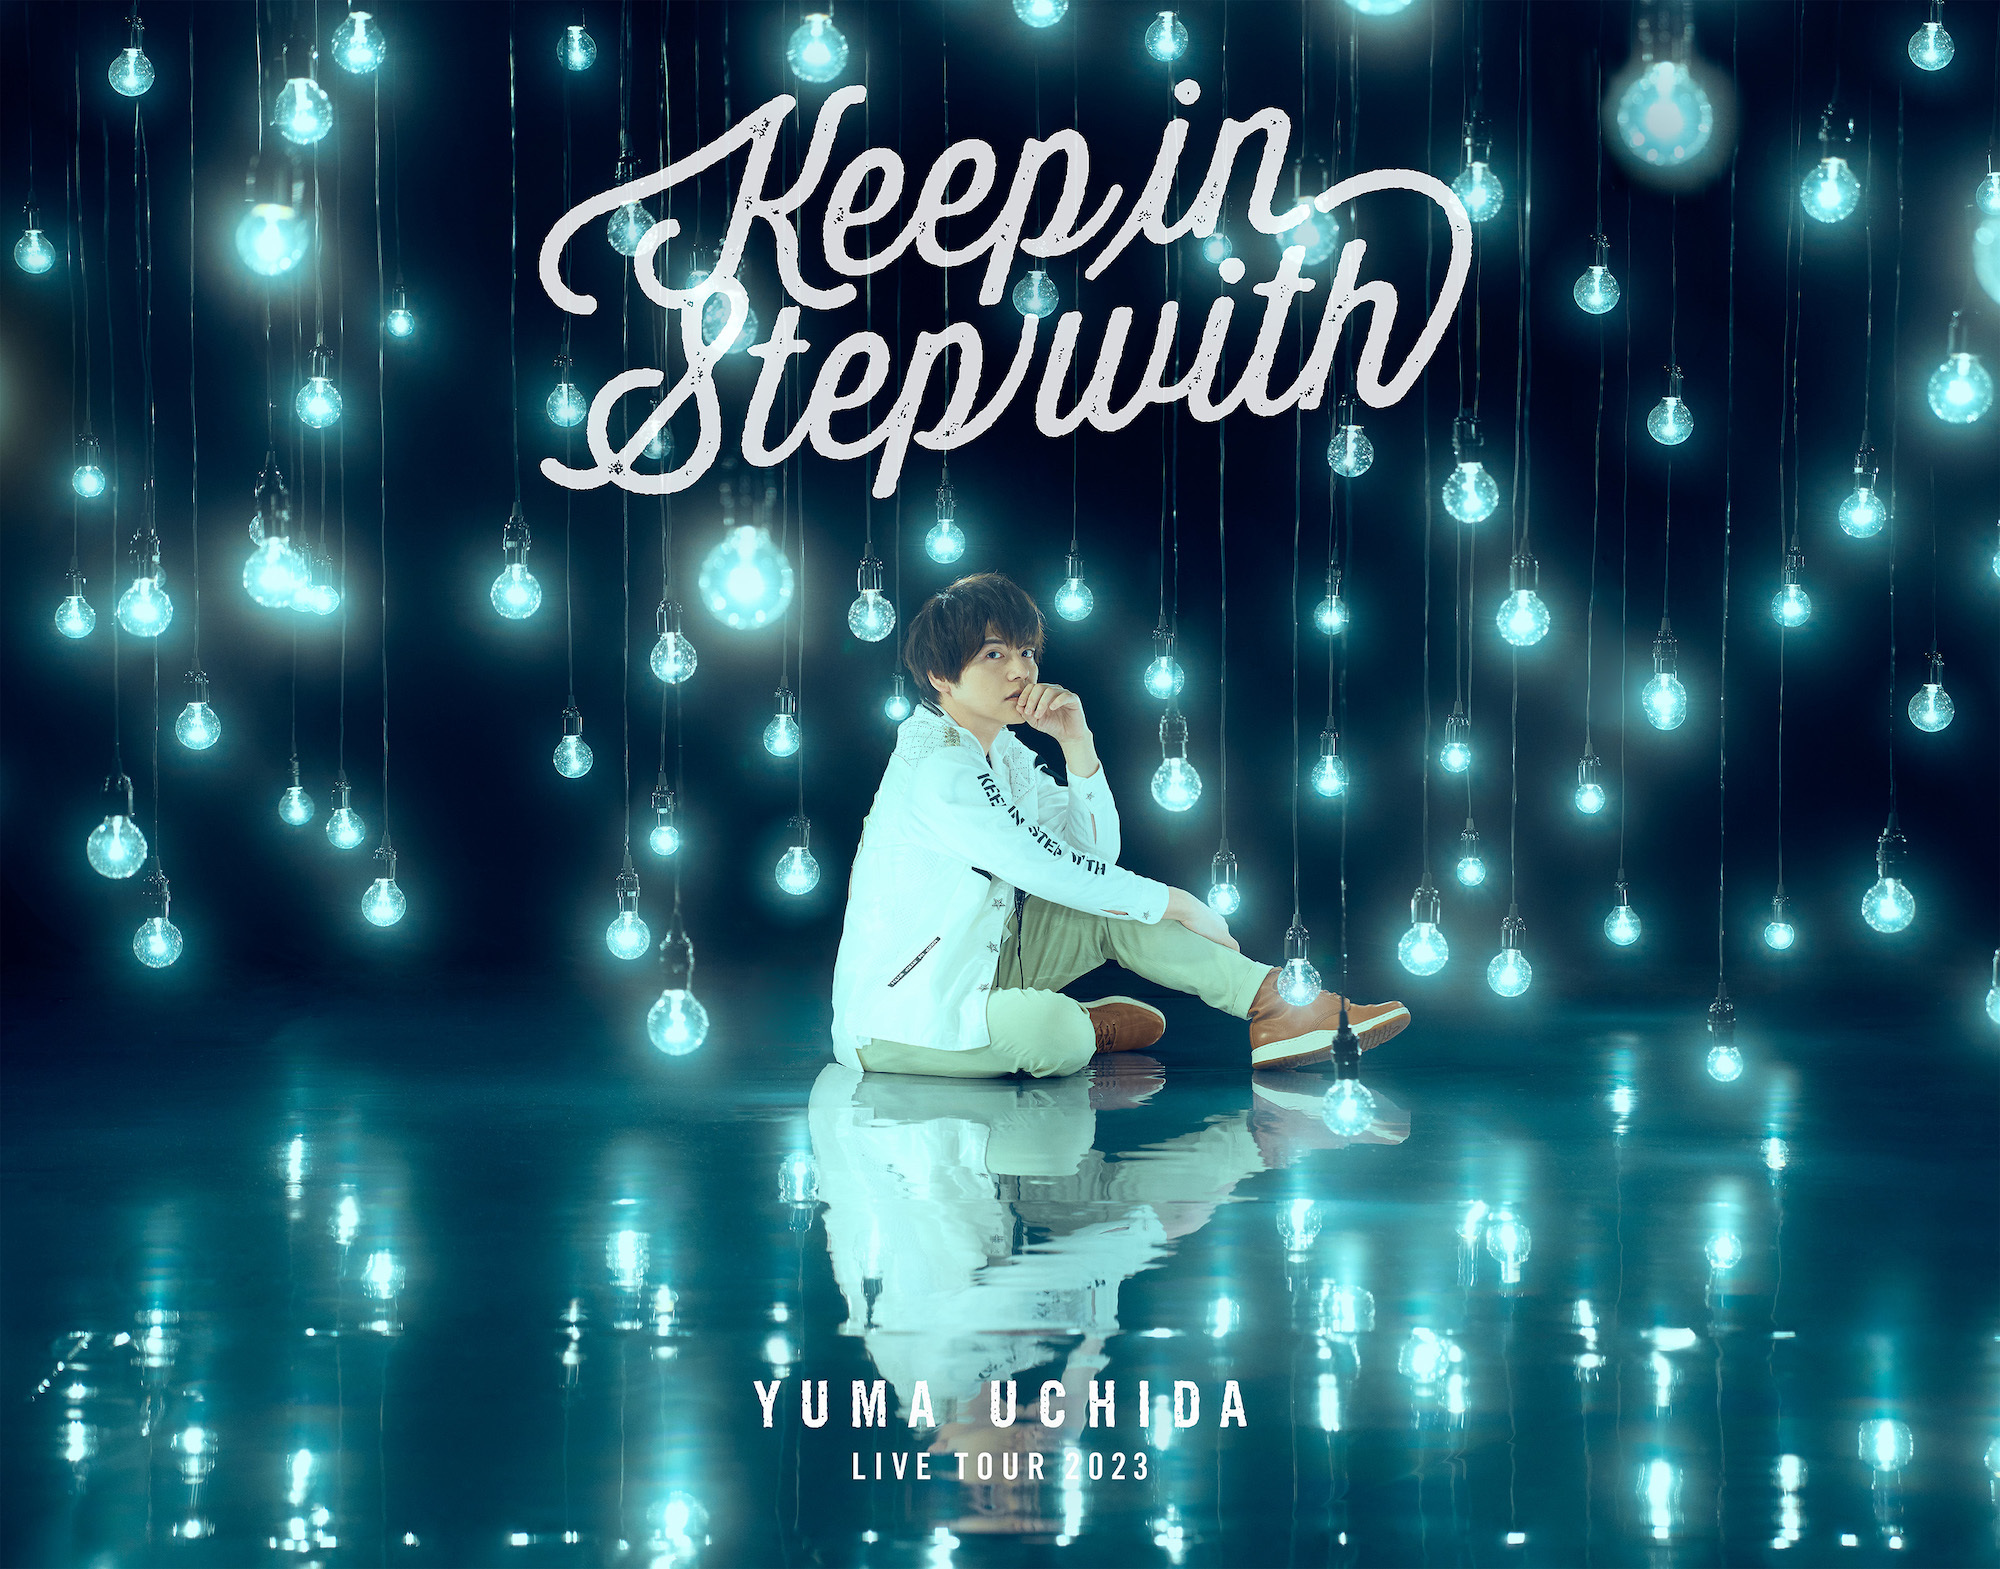 YUMA UCHIDA LIVE TOUR 2023 「Keep in Step with」Blu-rayジャケット